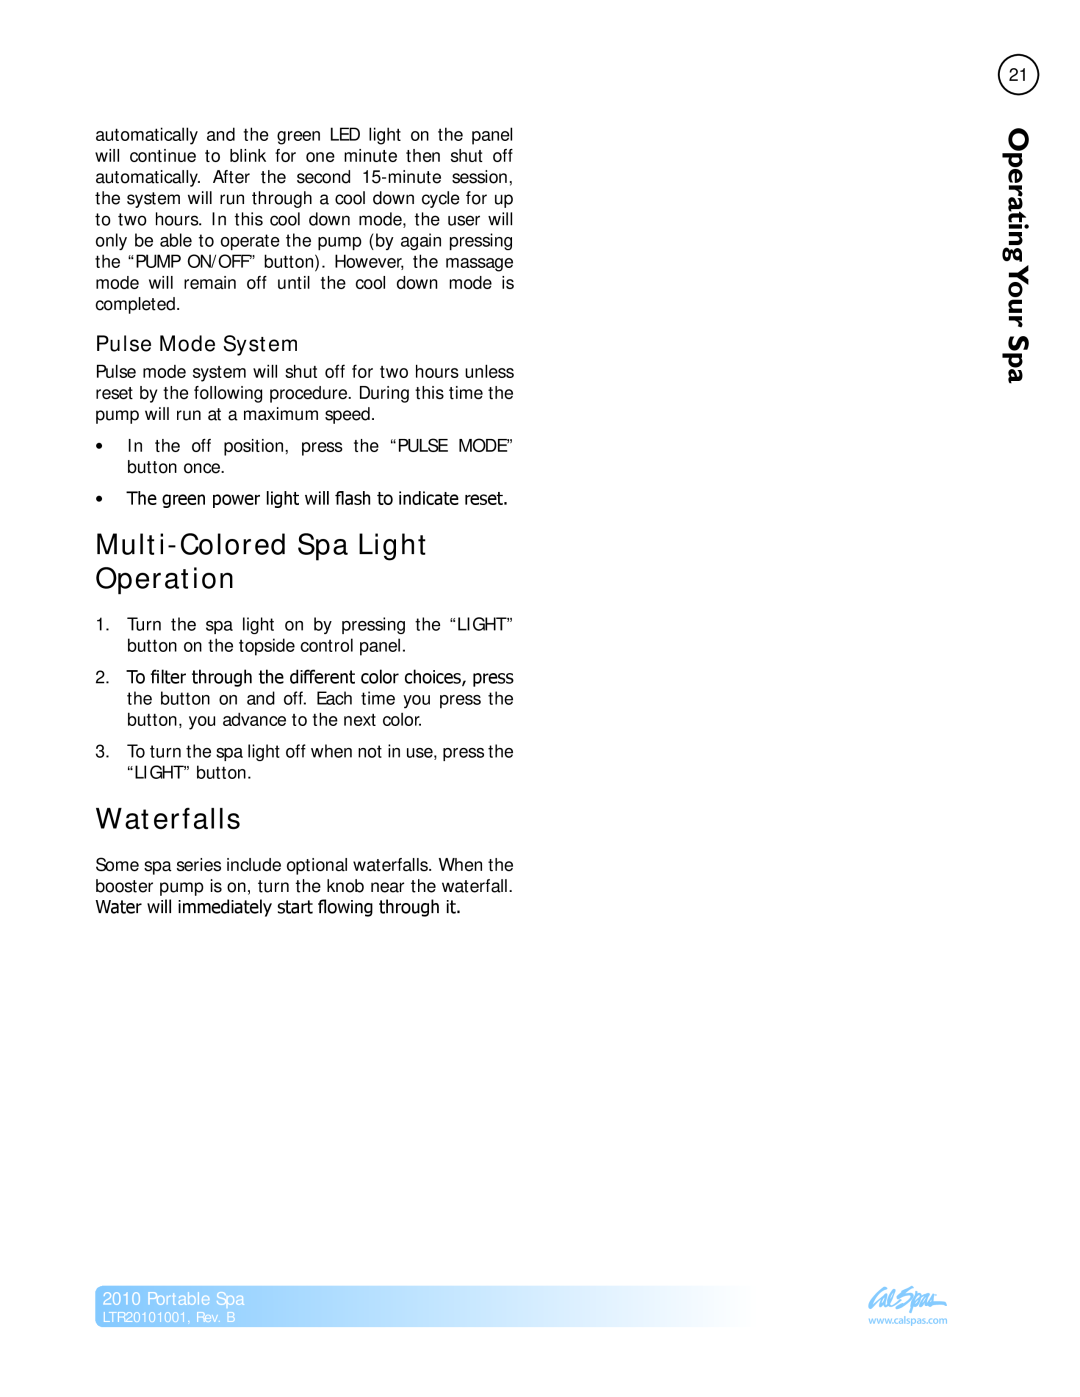 Cal Spas LTR20101001 manual Multi-ColoredSpa Light Operation, Waterfalls, Pulse Mode System, Portable Spa 